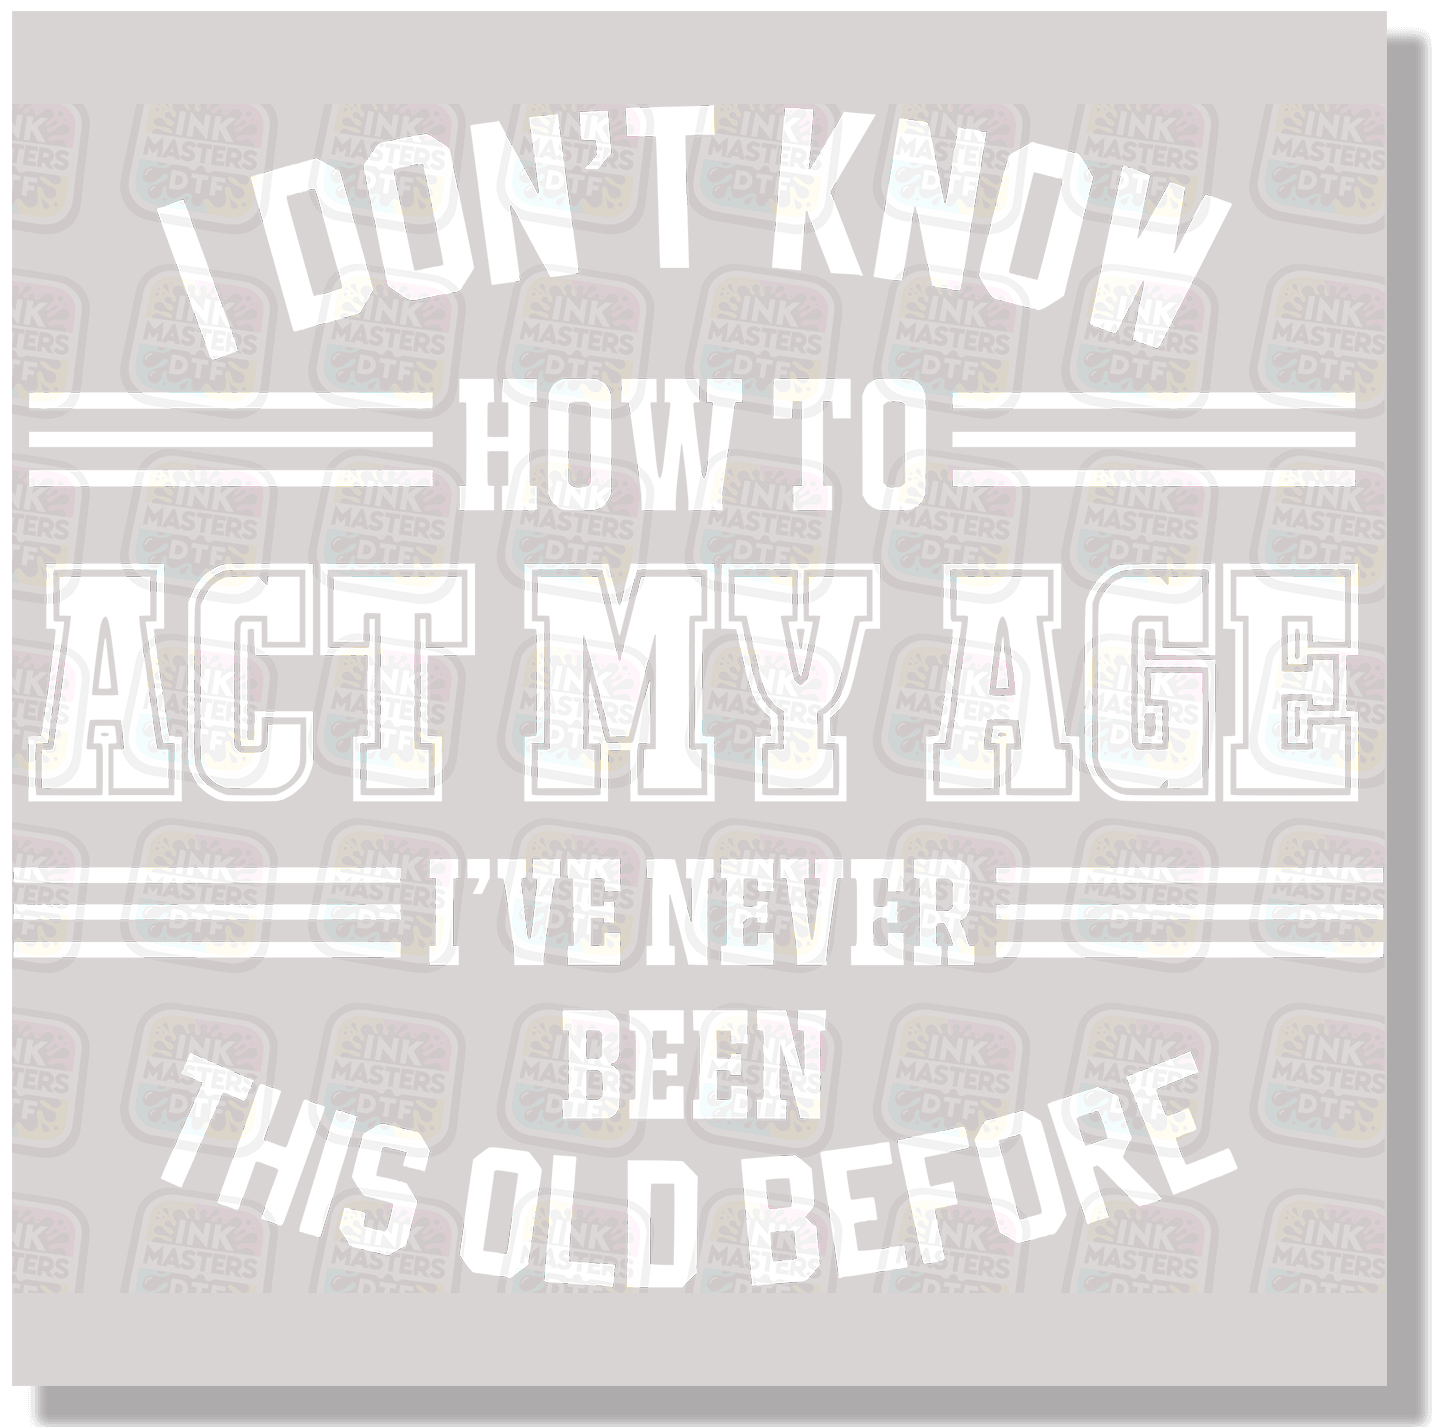 I Don't Know How To Act My Age I've Never Been This Old Before DTF Transfer - Ink Masters DTF